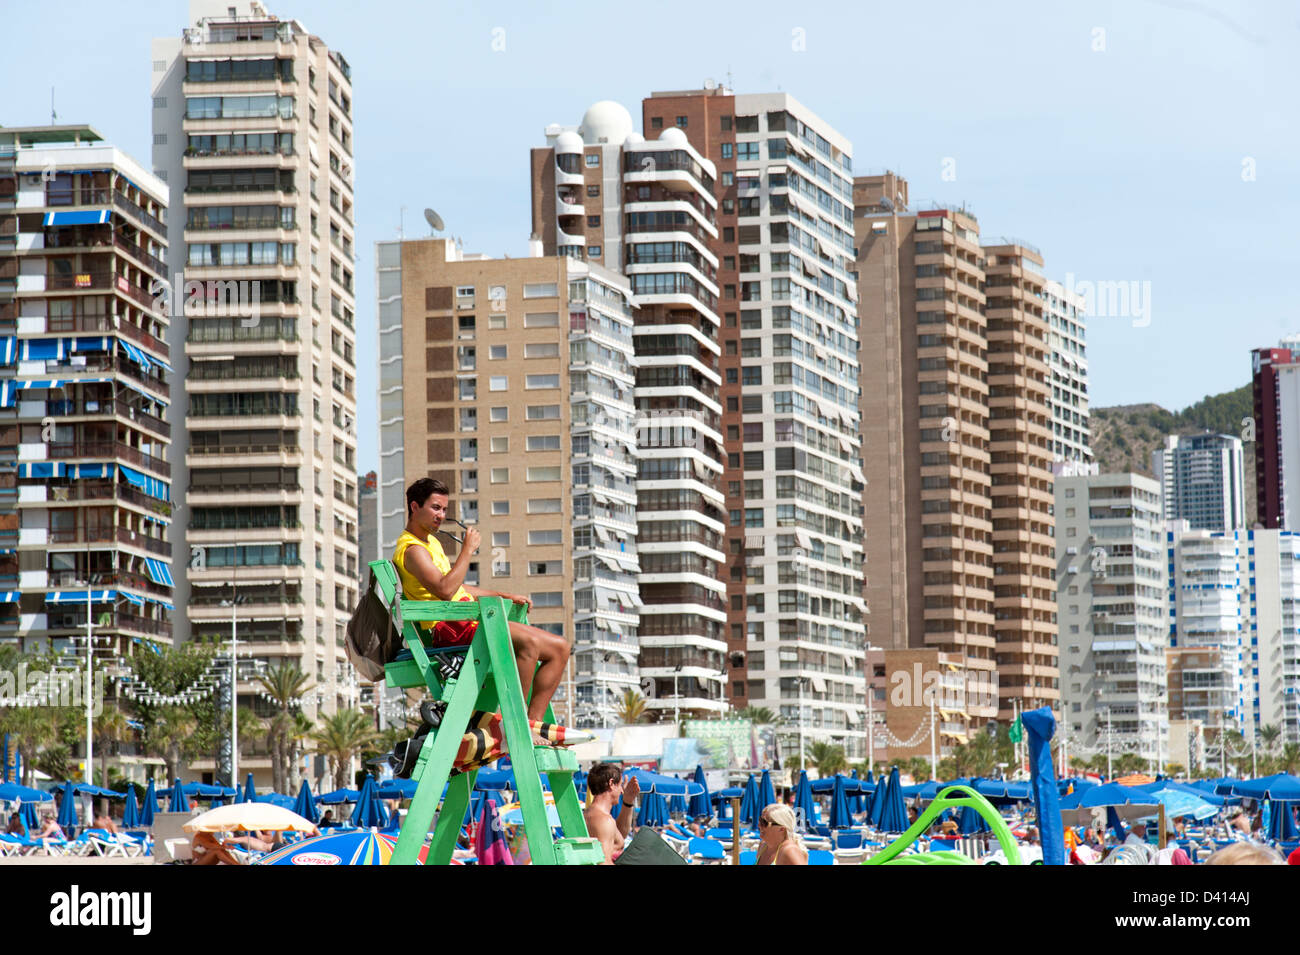 Lifeguard in his high chair on the beach, Benidorm, Costa Blanca, Spain Stock Photo